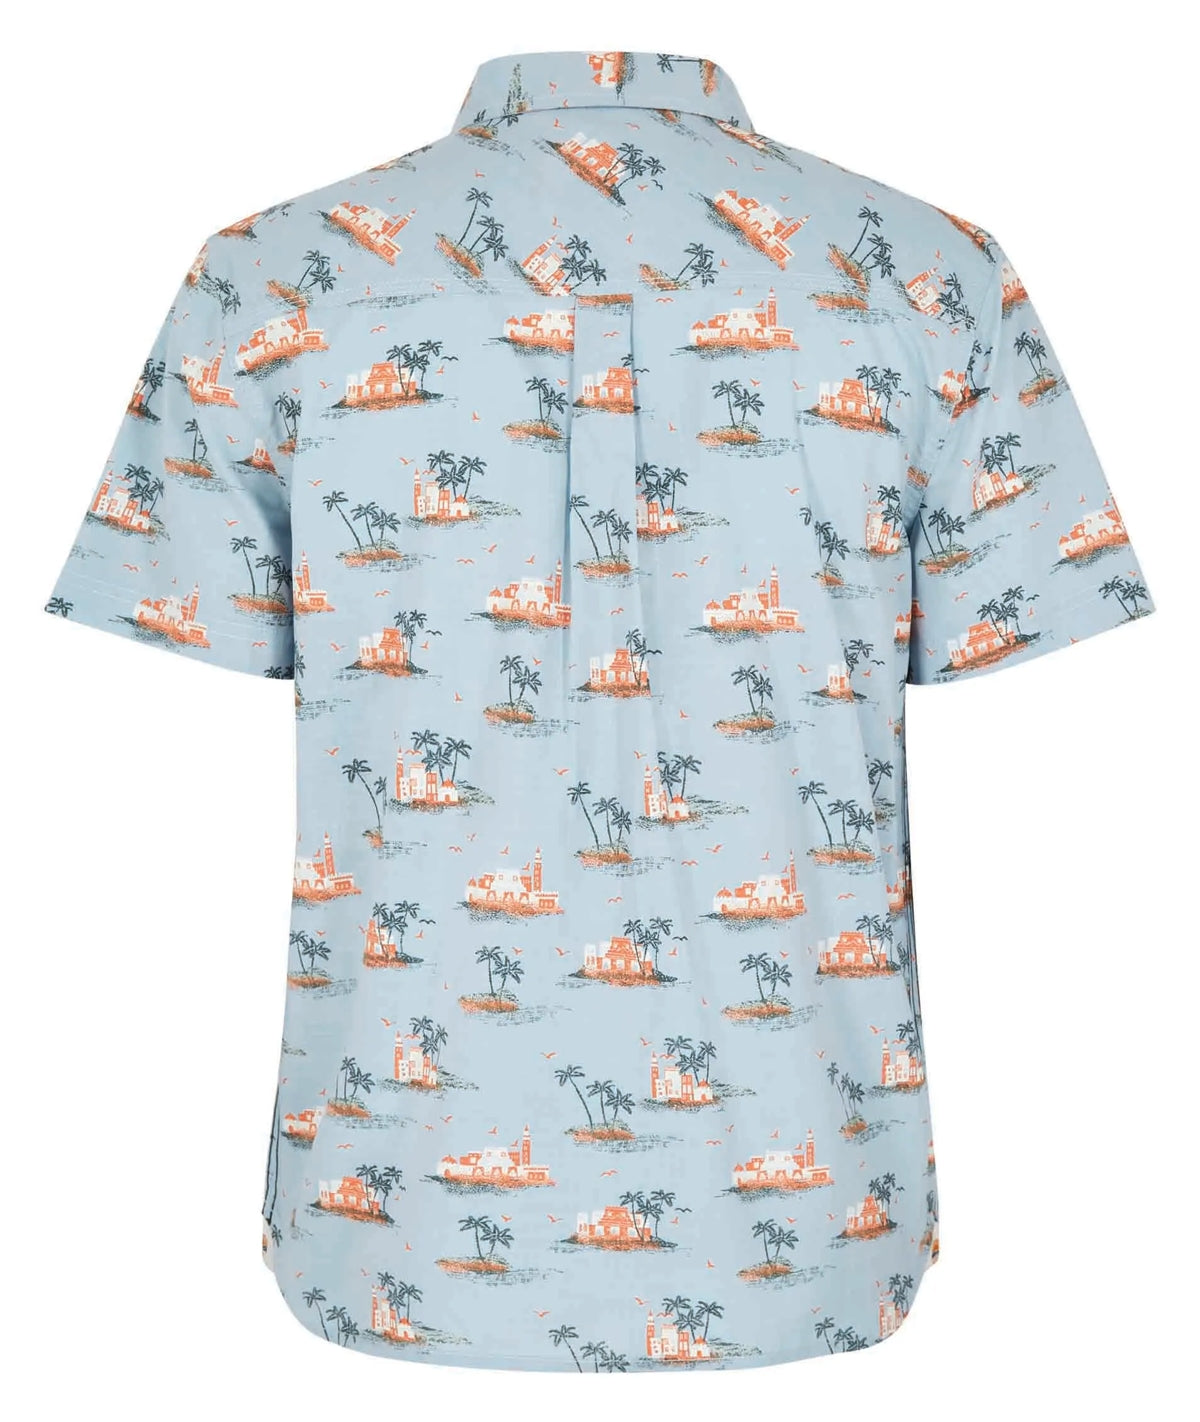 Tropical island print mens short sleeve shirt from Weird Fish in Powder Blue.